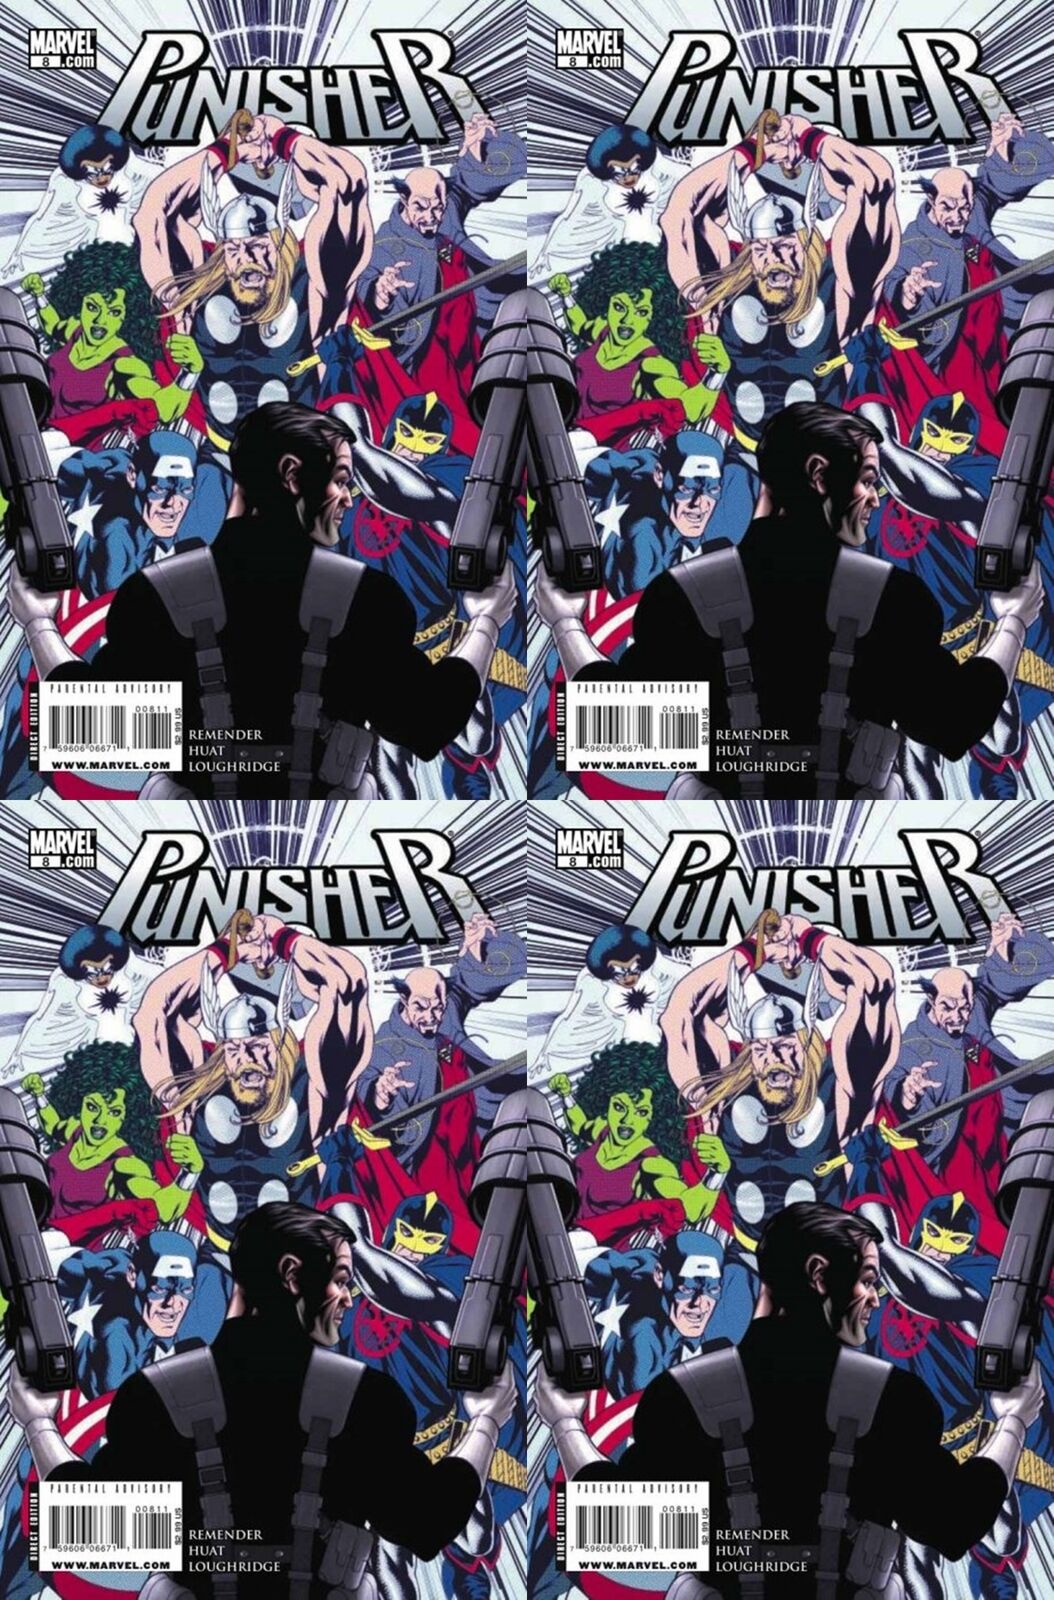 Punisher #8 Volume 8 (2009-2010) Marvel Comics - 4 Comics